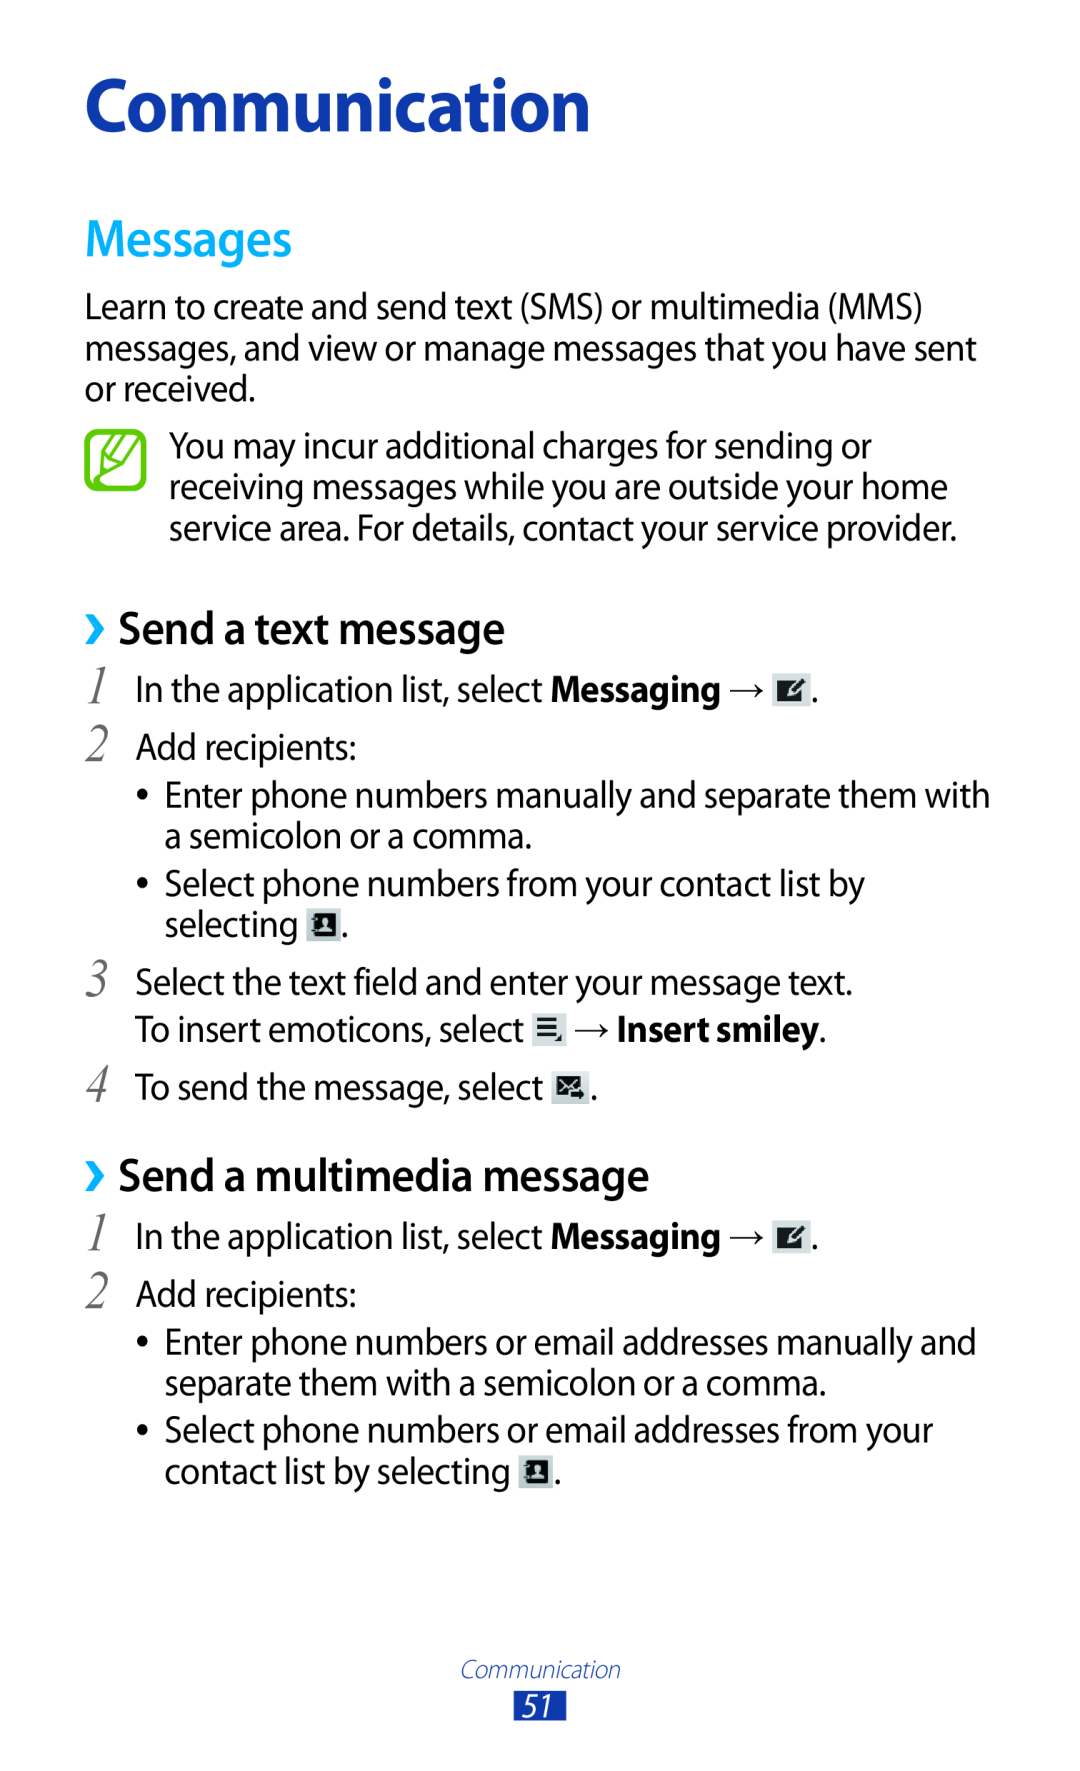 Samsung GT-P7500UWDXSG, GT-P7500UWEDBT manual Communication, Messages, ››Send a text message, ››Send a multimedia message 